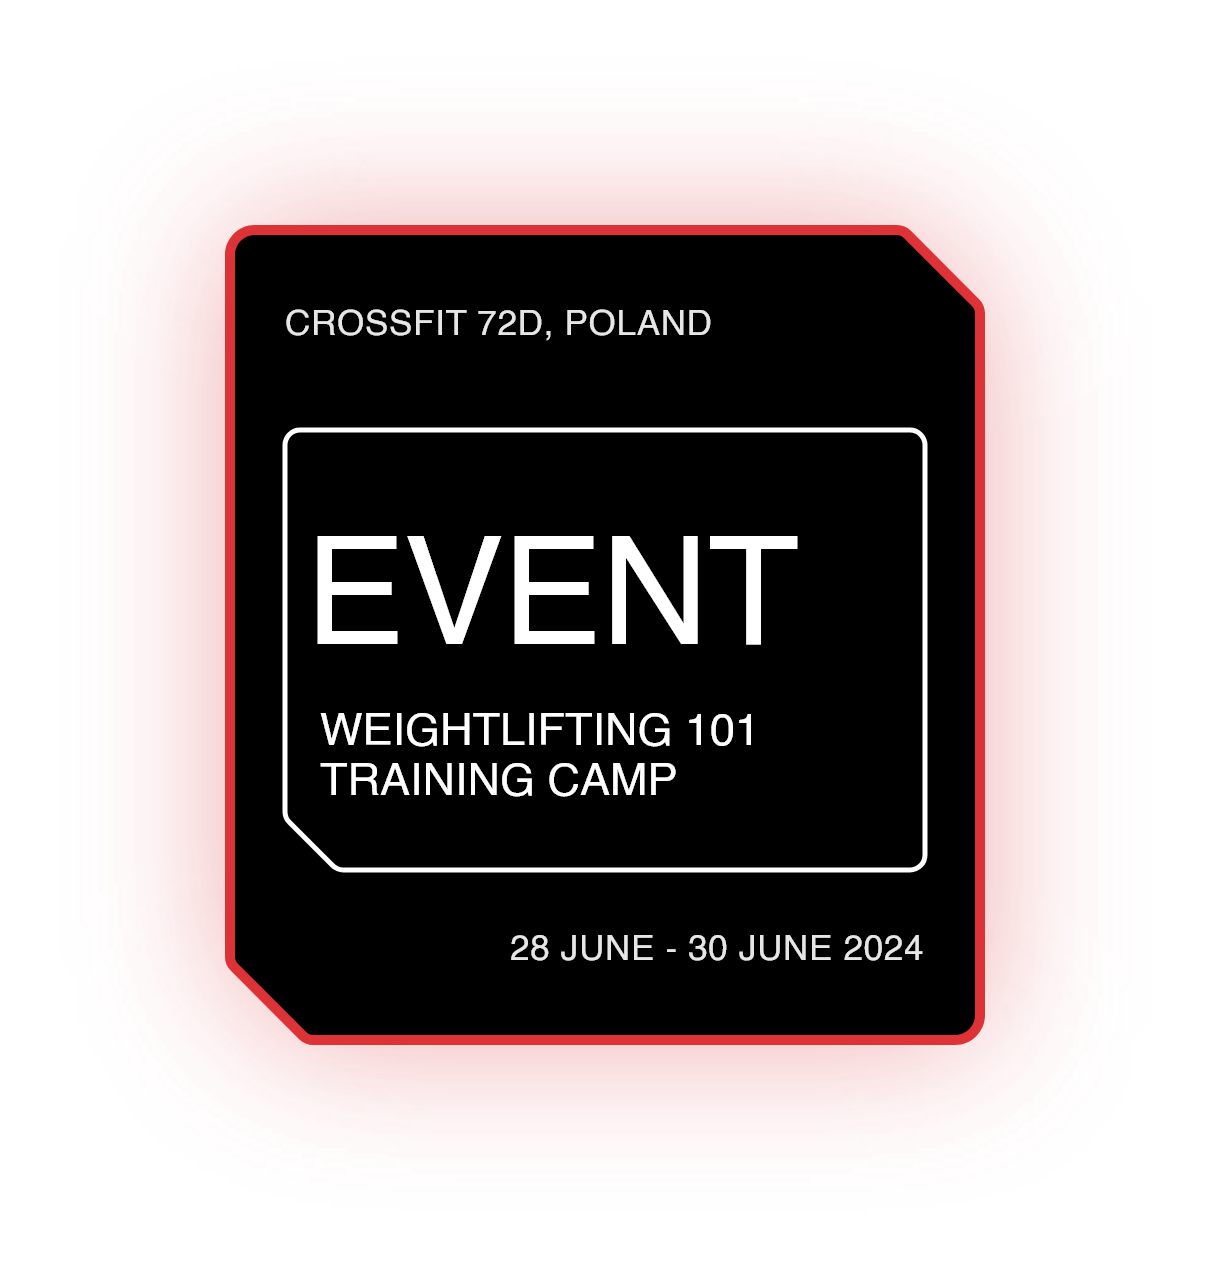 Weightlifting 101 Training Camp - Kraków, Poland